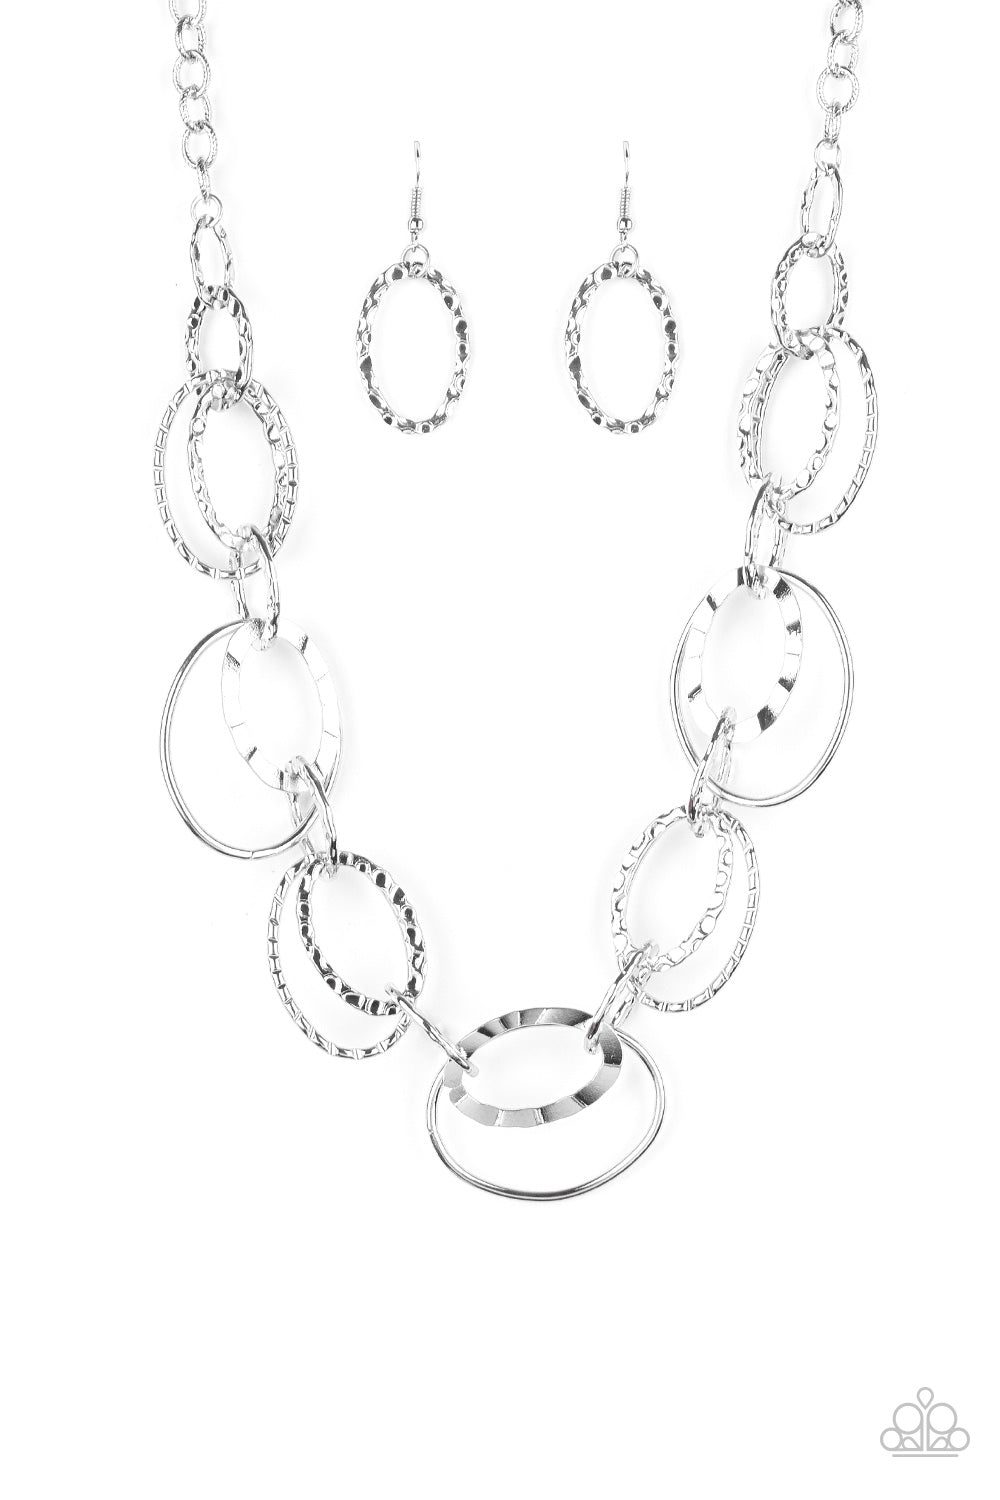 Bend OVAL Backwards - silver - Paparazzi necklace